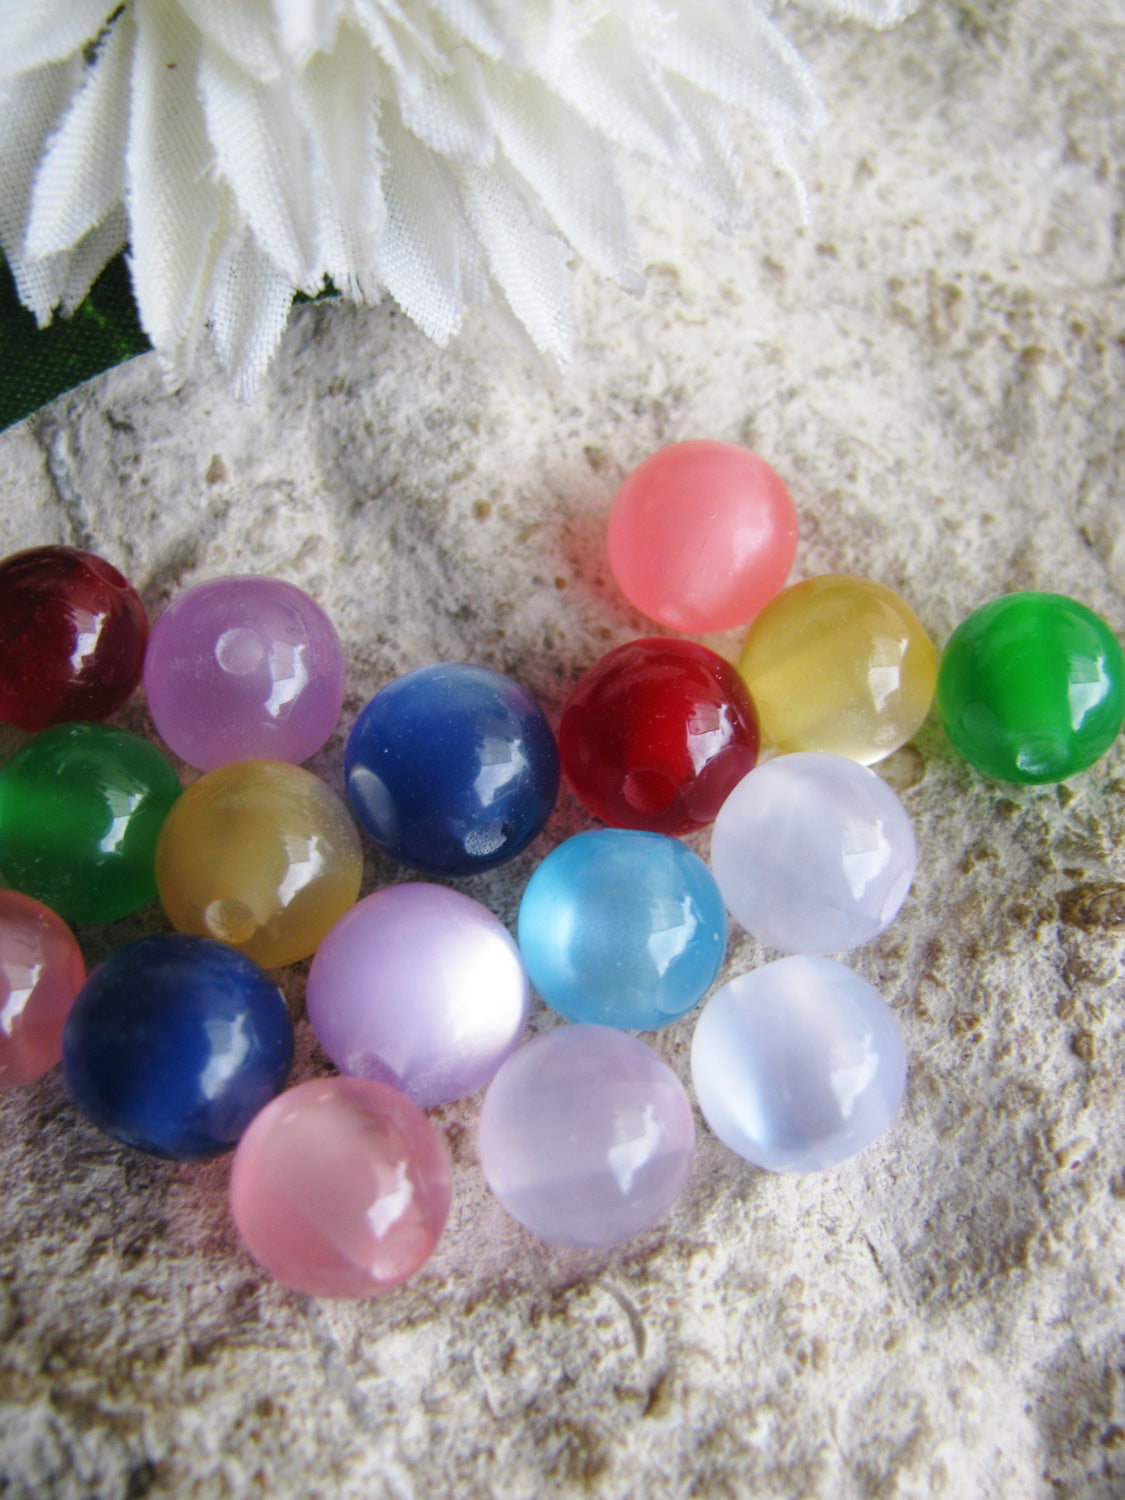 20 Resin Perlen bunt gemischt 8 mm, Schmuck mit Perlen selbst machen Acrylperlen